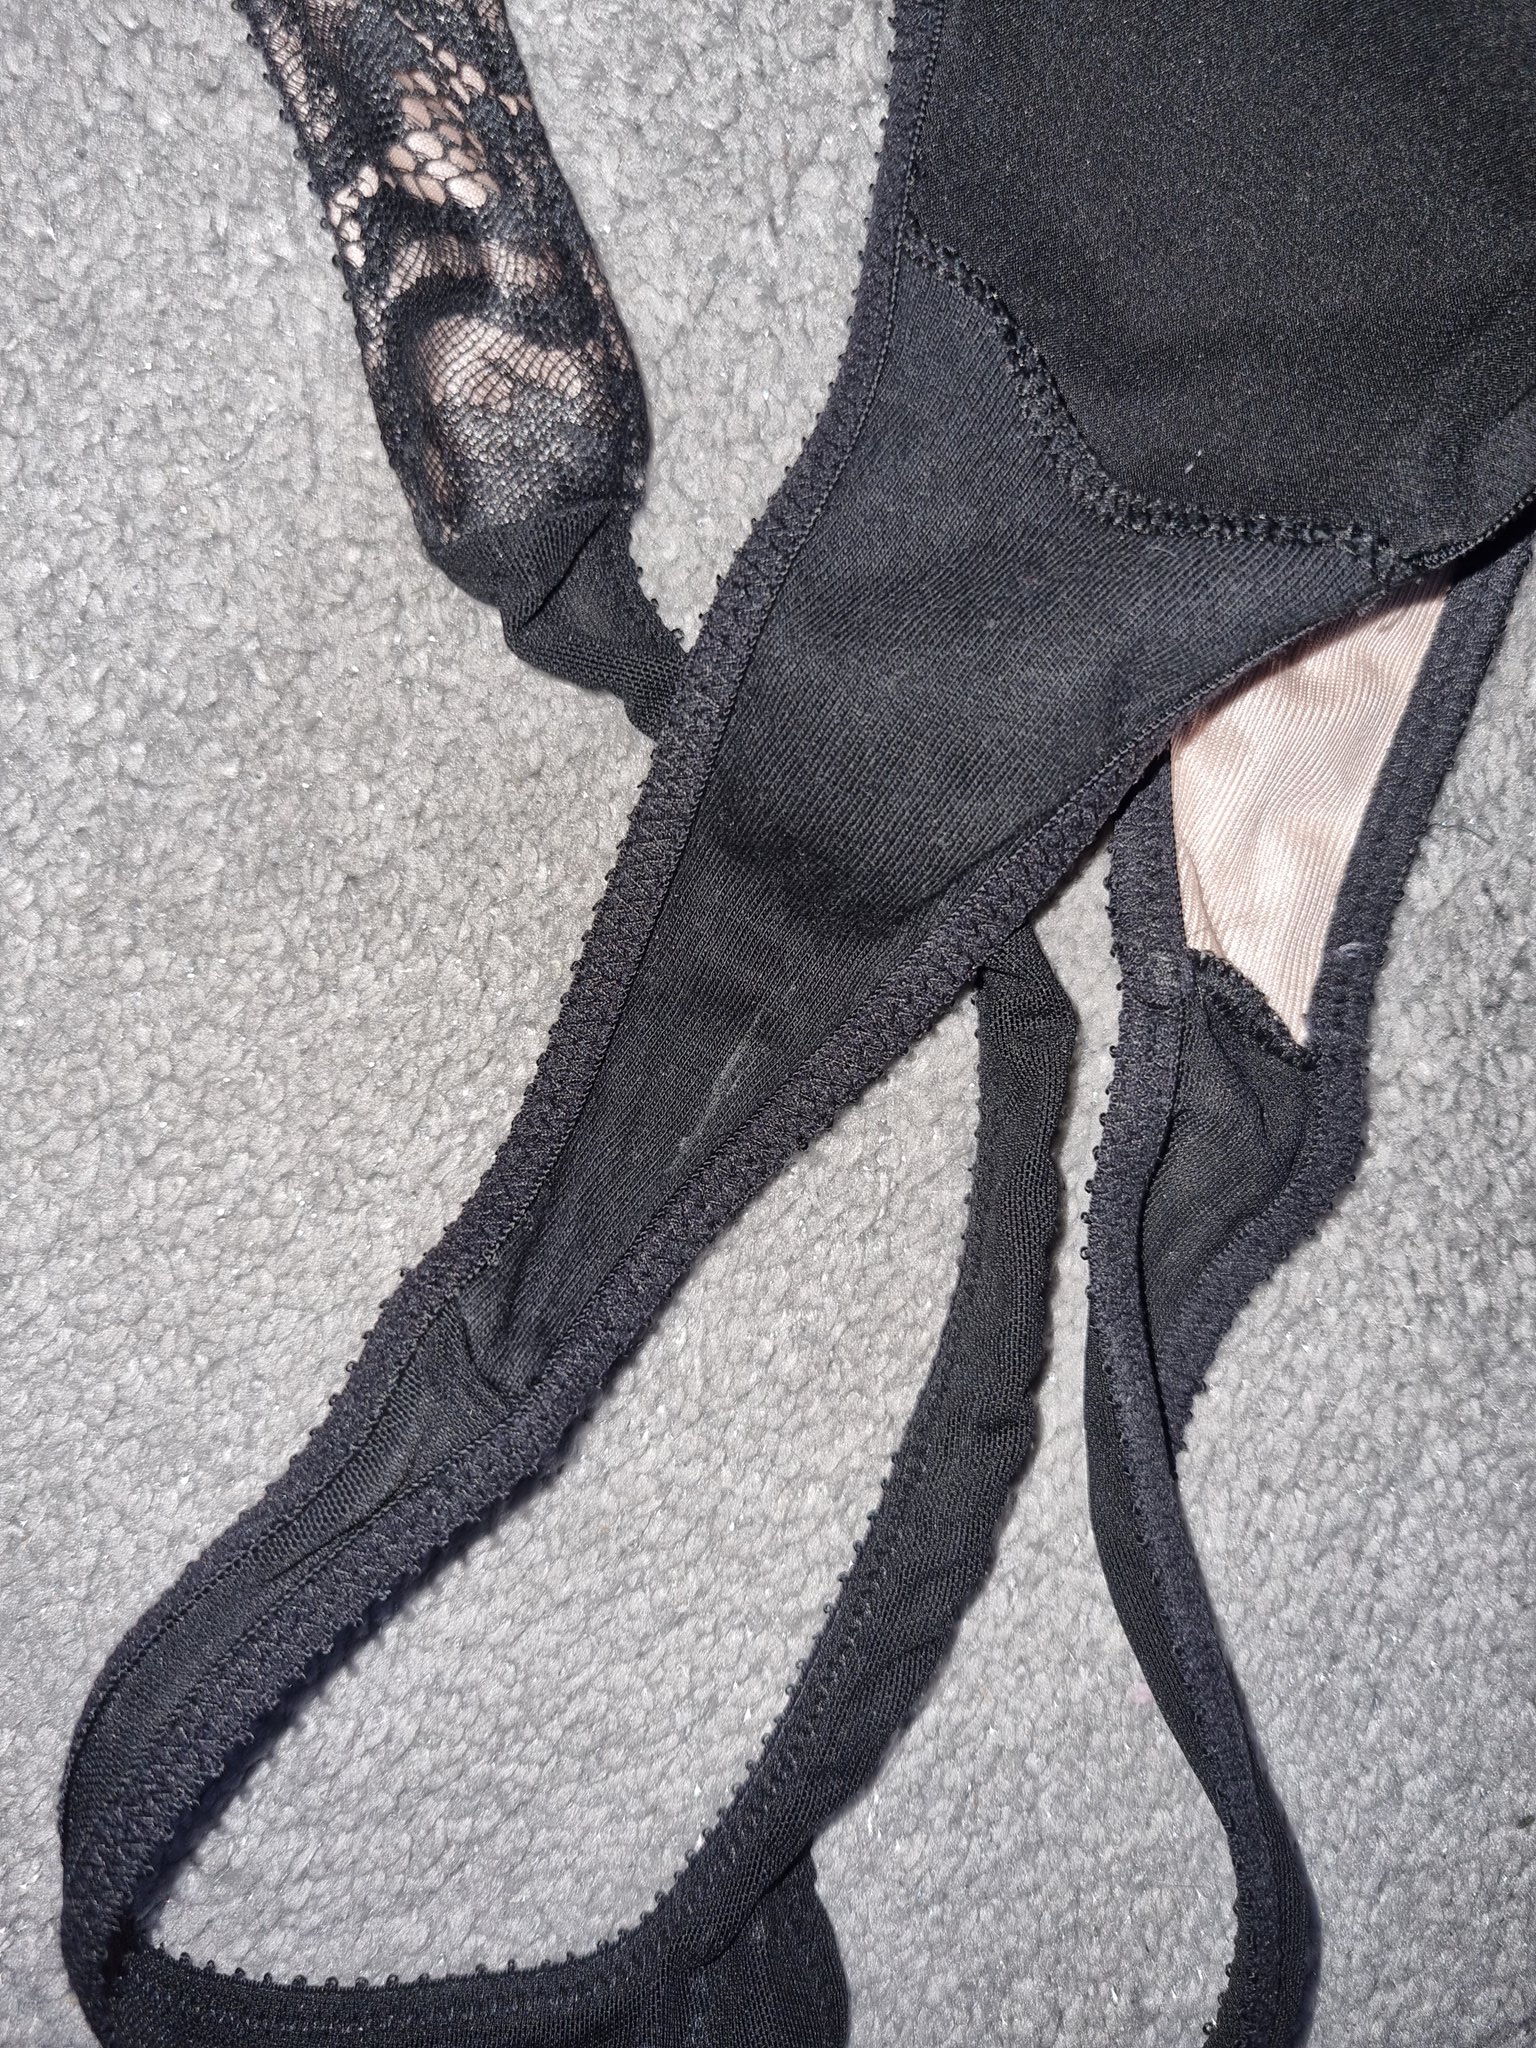 My Wifes Panties On Twitter Nice Thong 😜 😍 Kkazdaofwr 